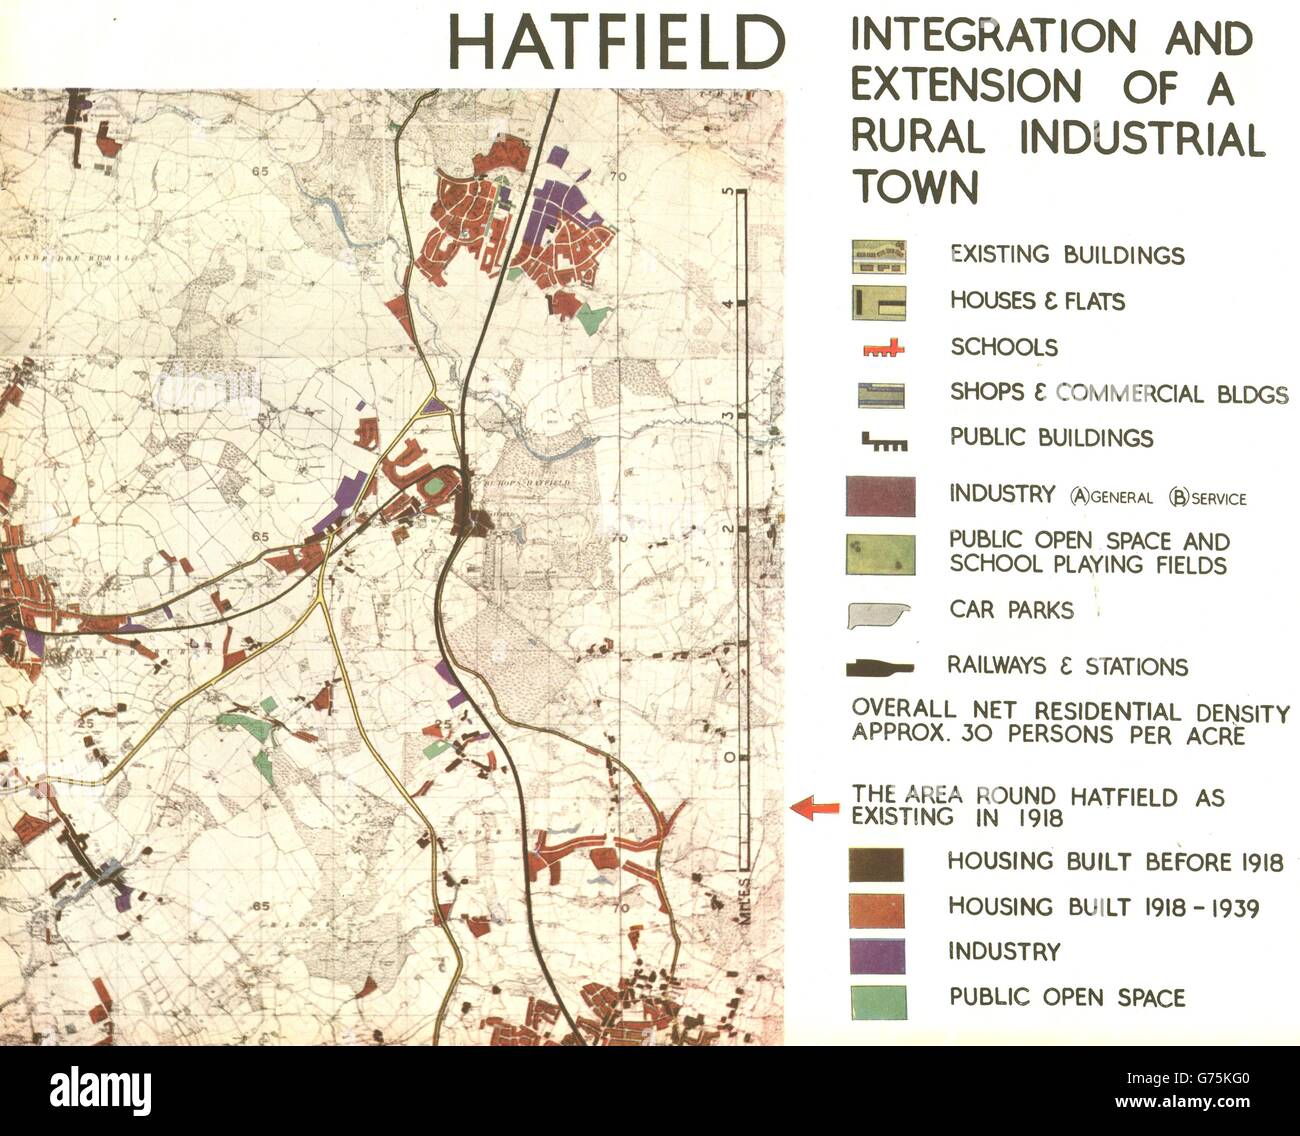 HATFIELD. Londres Plan de redesarrollo de posguerra Hertfordshire. ABERCROMBIE, 1944 mapa Foto de stock